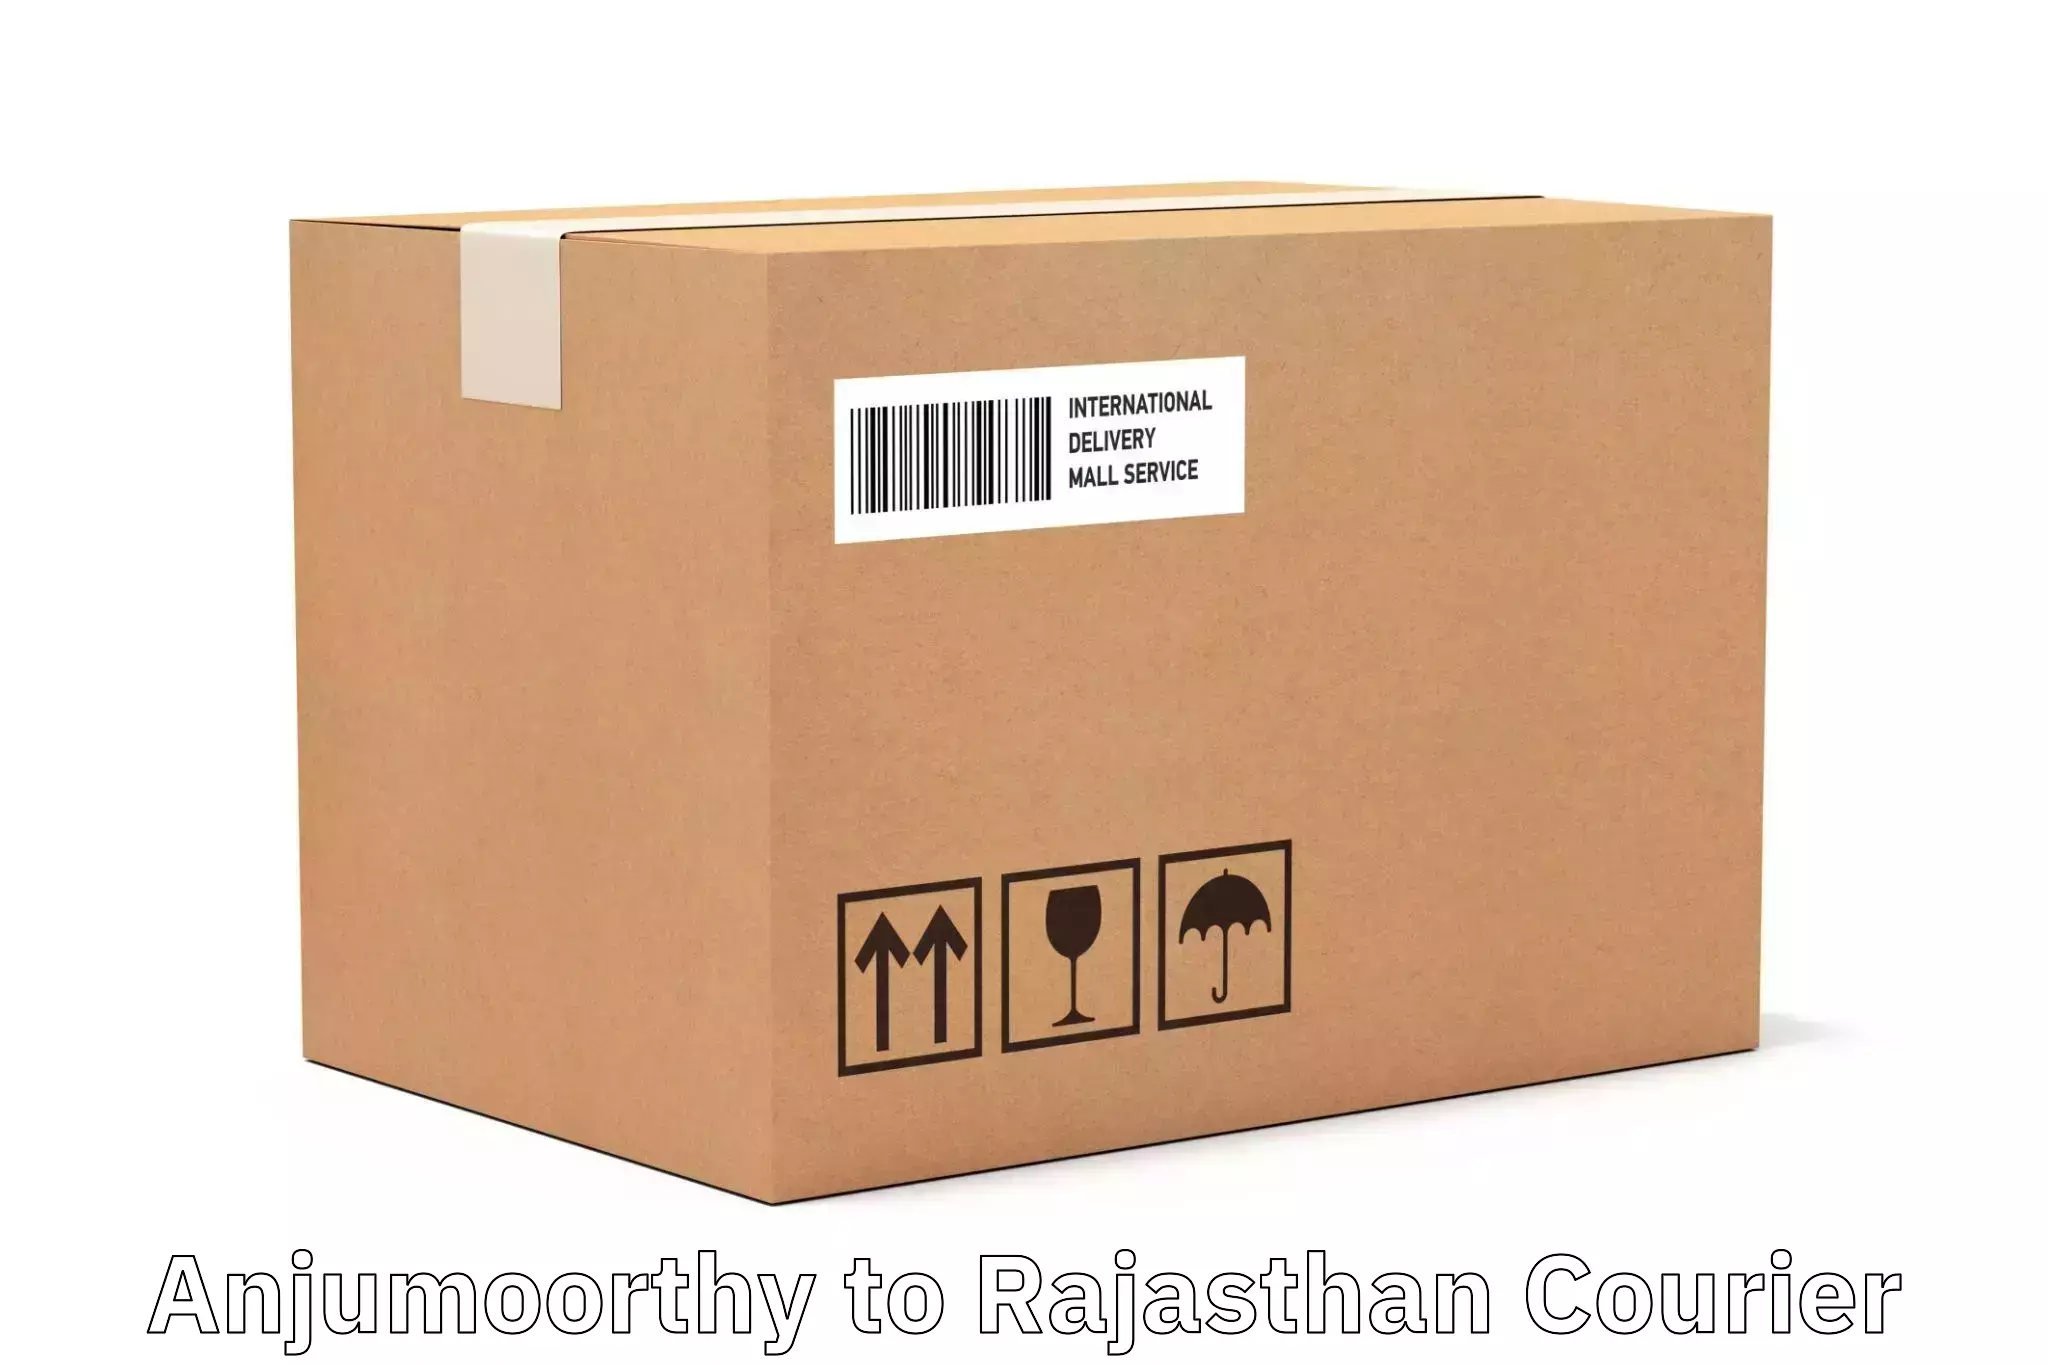 Global shipping networks Anjumoorthy to Rajasthan